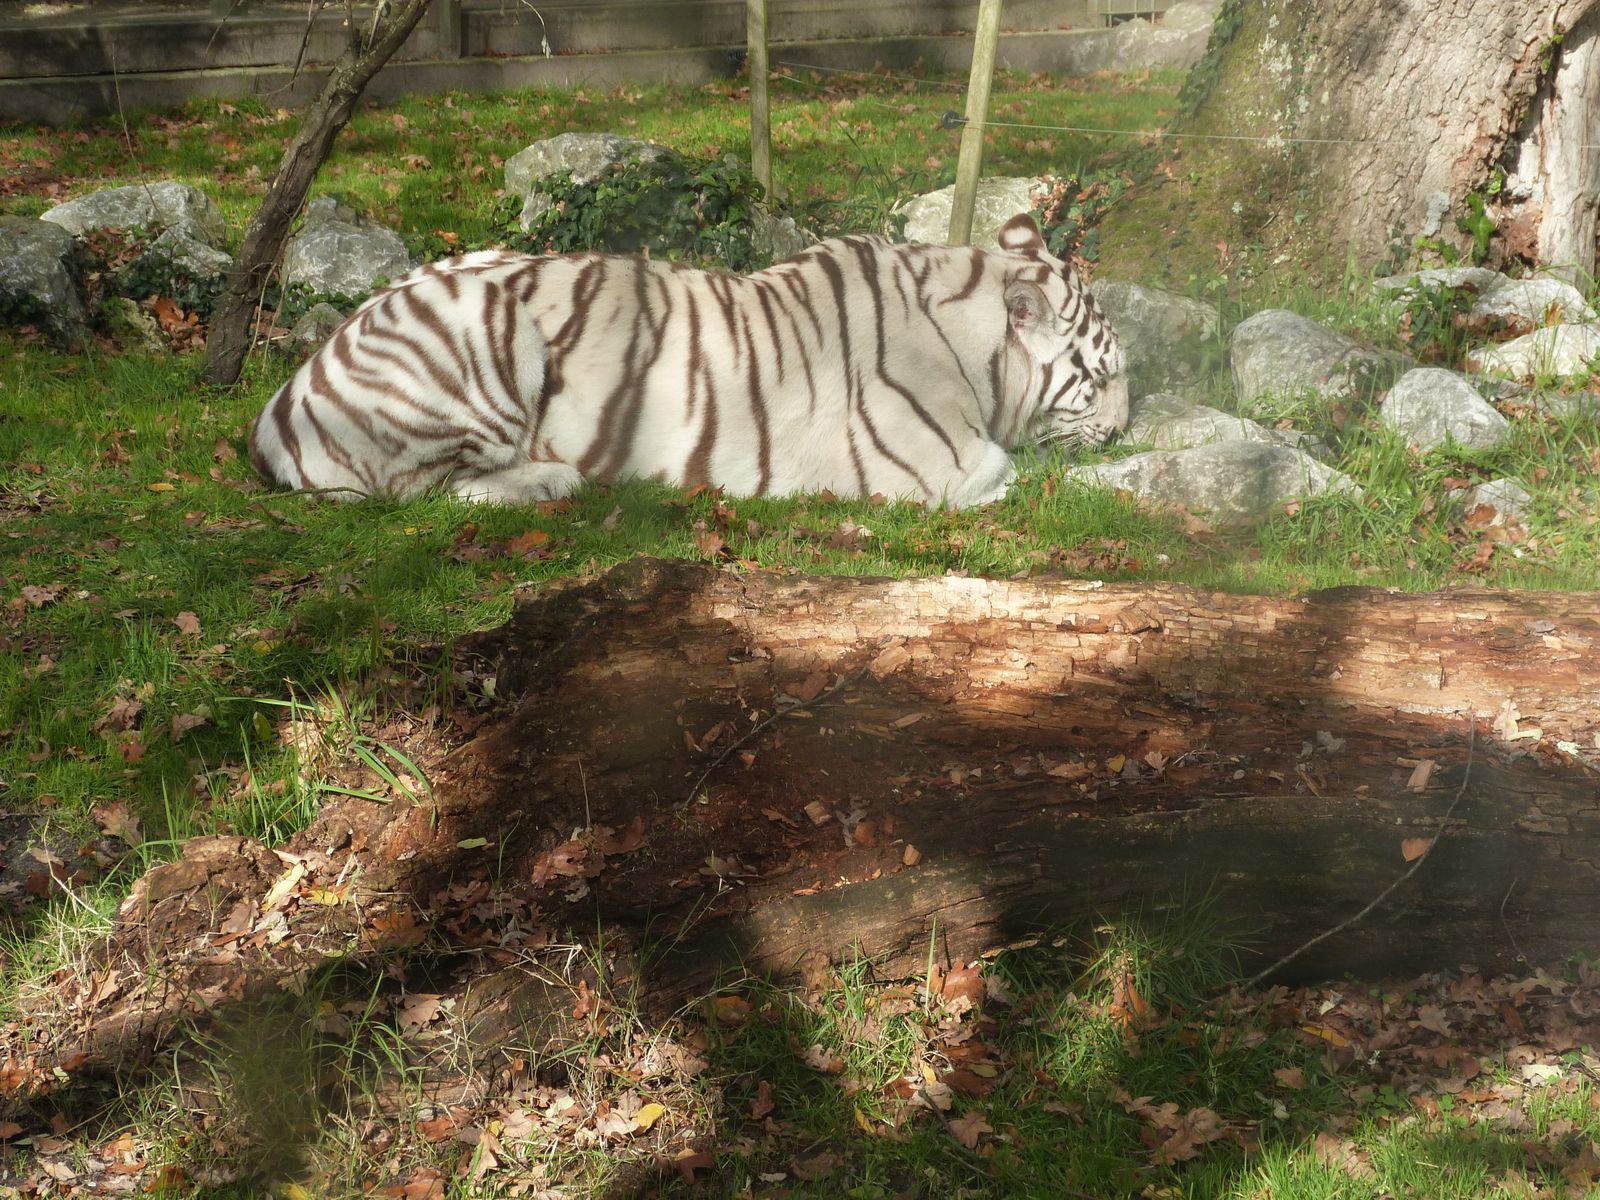 Notre visite au Zoo de pessac, novembre 2012